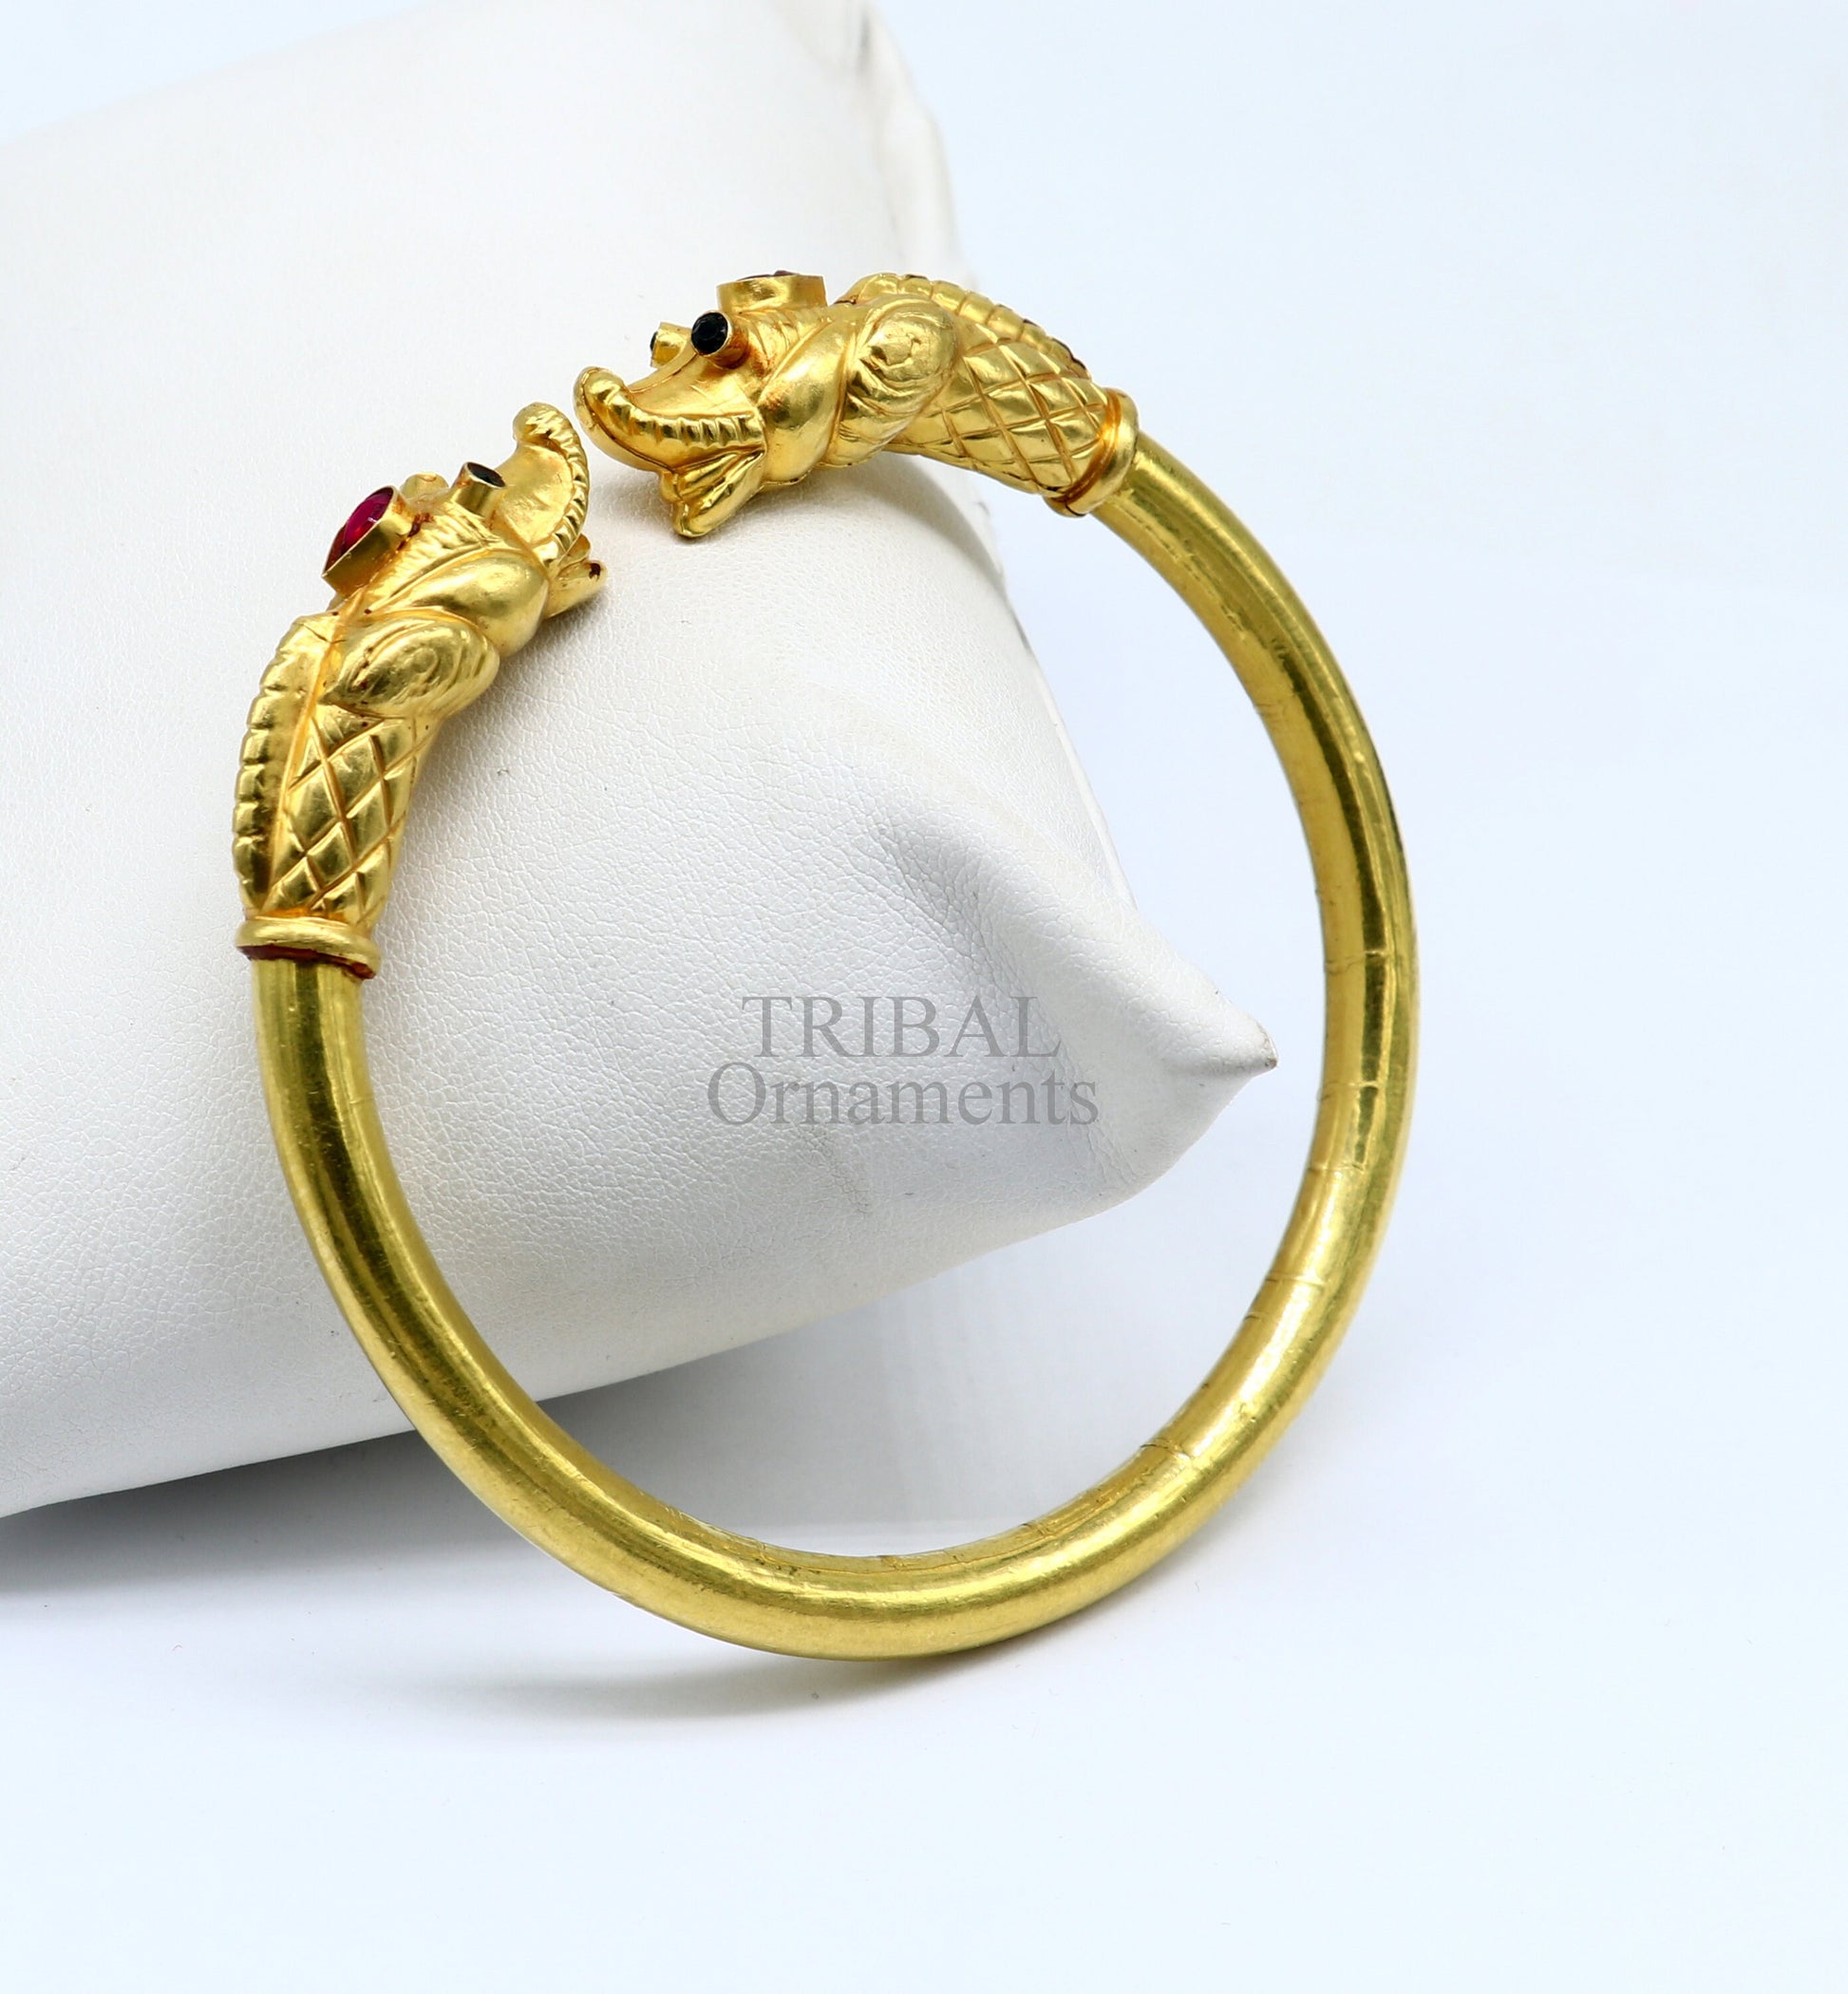 22k yellow gold handmade fabulous vintage elephant face design bangle bracelet kada certified hallmarked jewelry for girls women's gk04 - TRIBAL ORNAMENTS